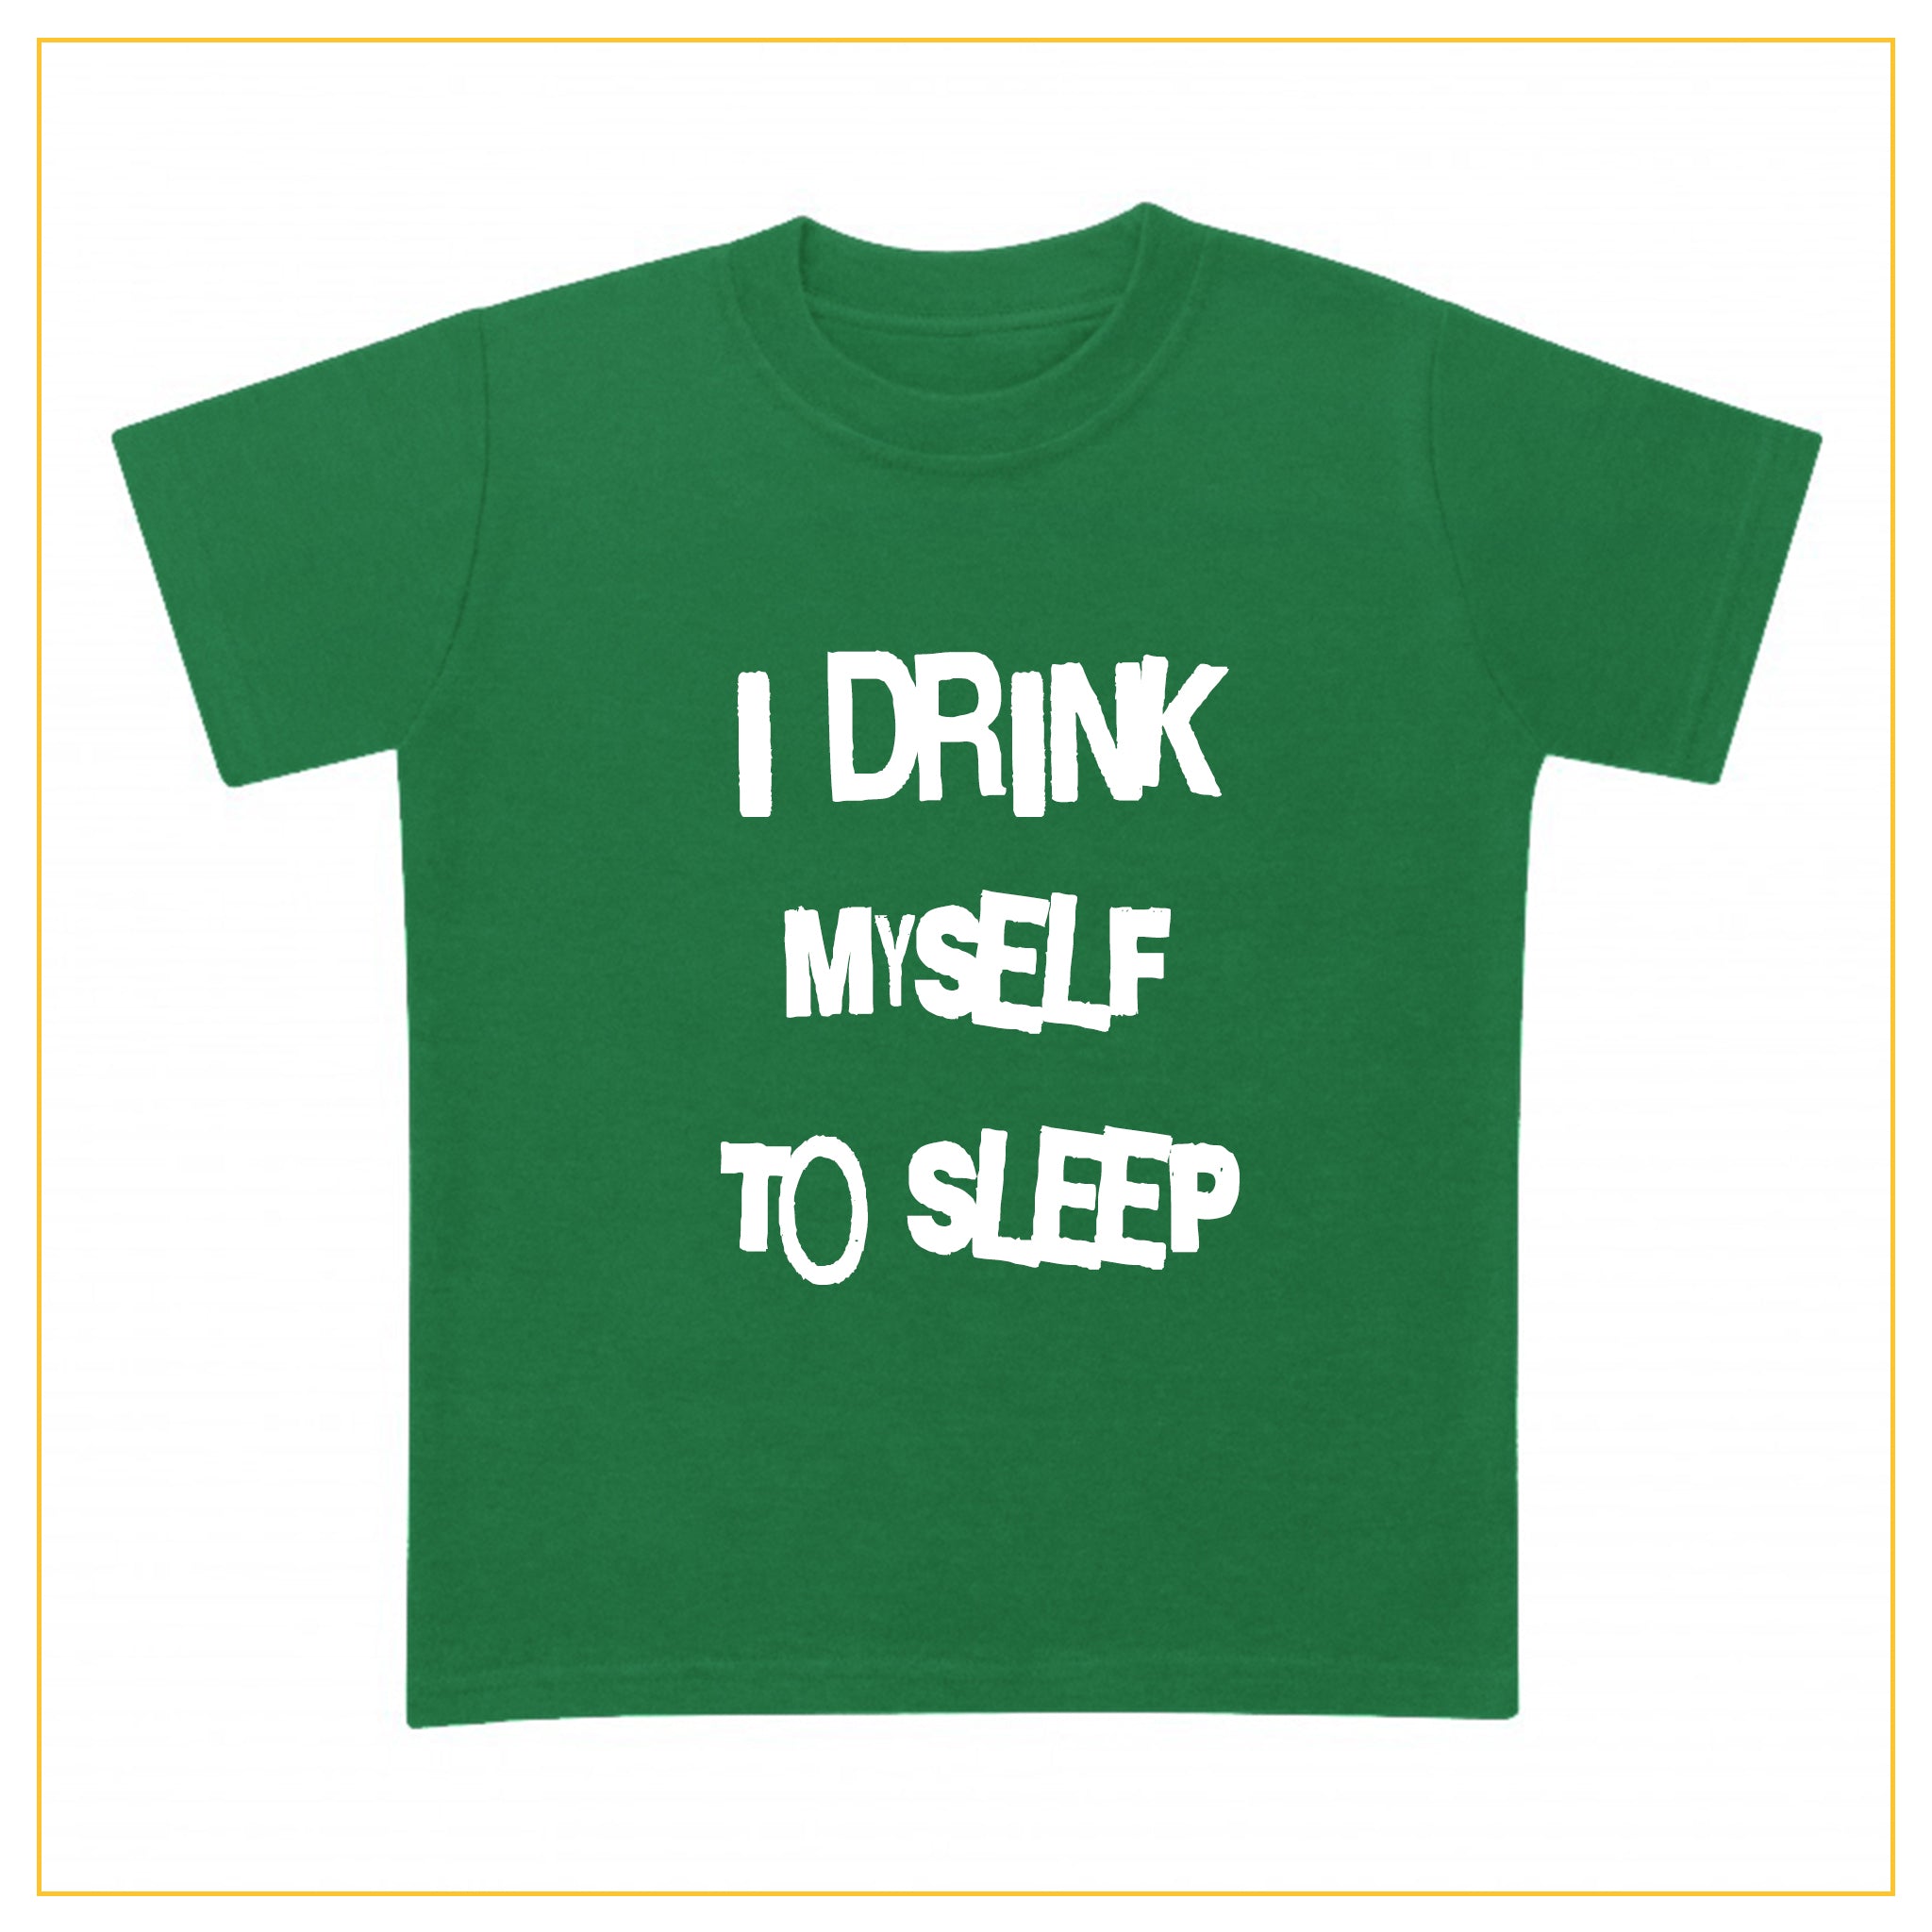 I drink myself to sleep baby t-shirt in green